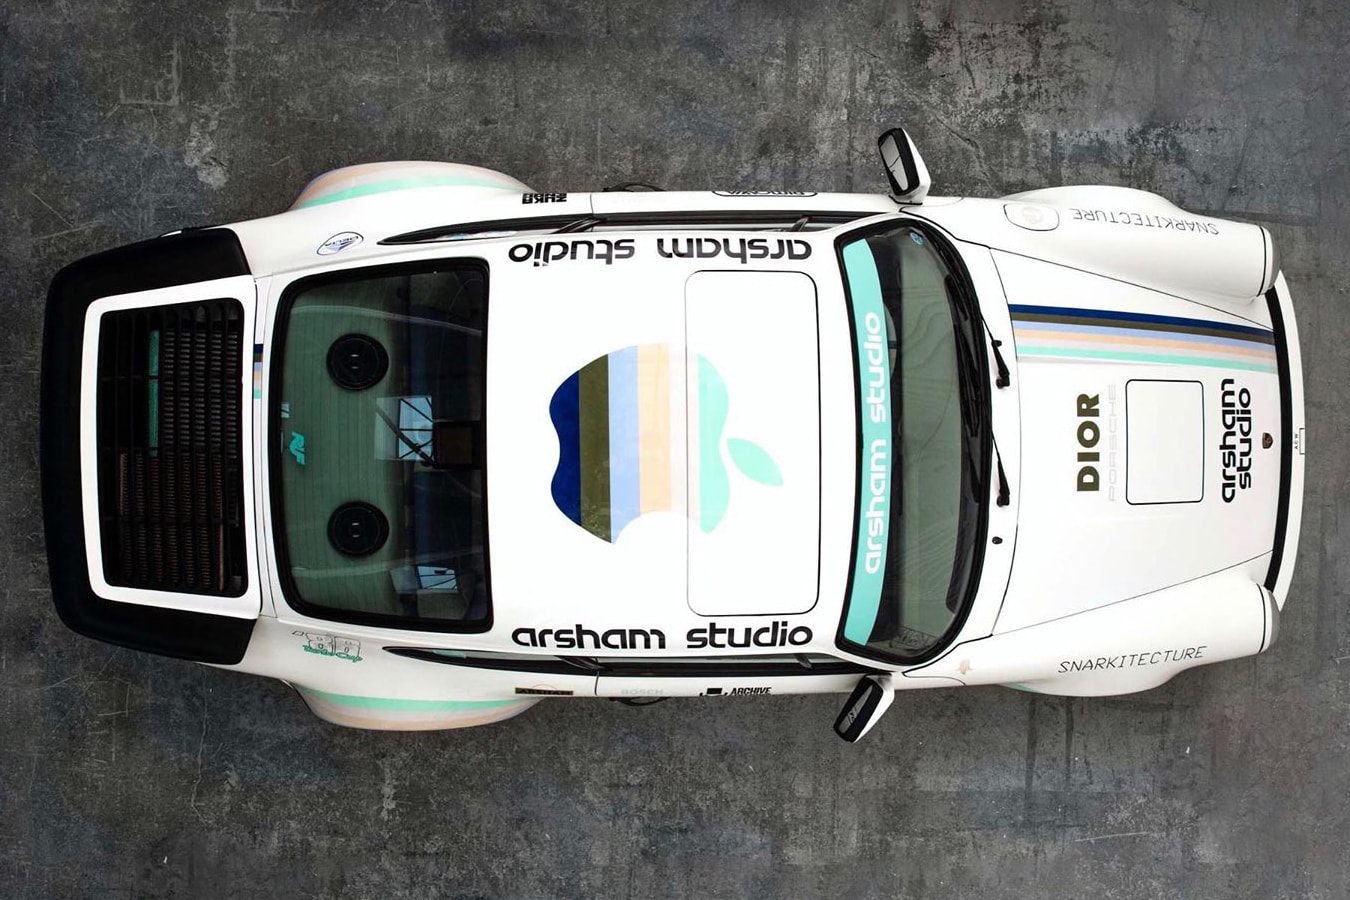 daniel arsham porsche 911 turbo 930a cars supercars vehicles collaborations